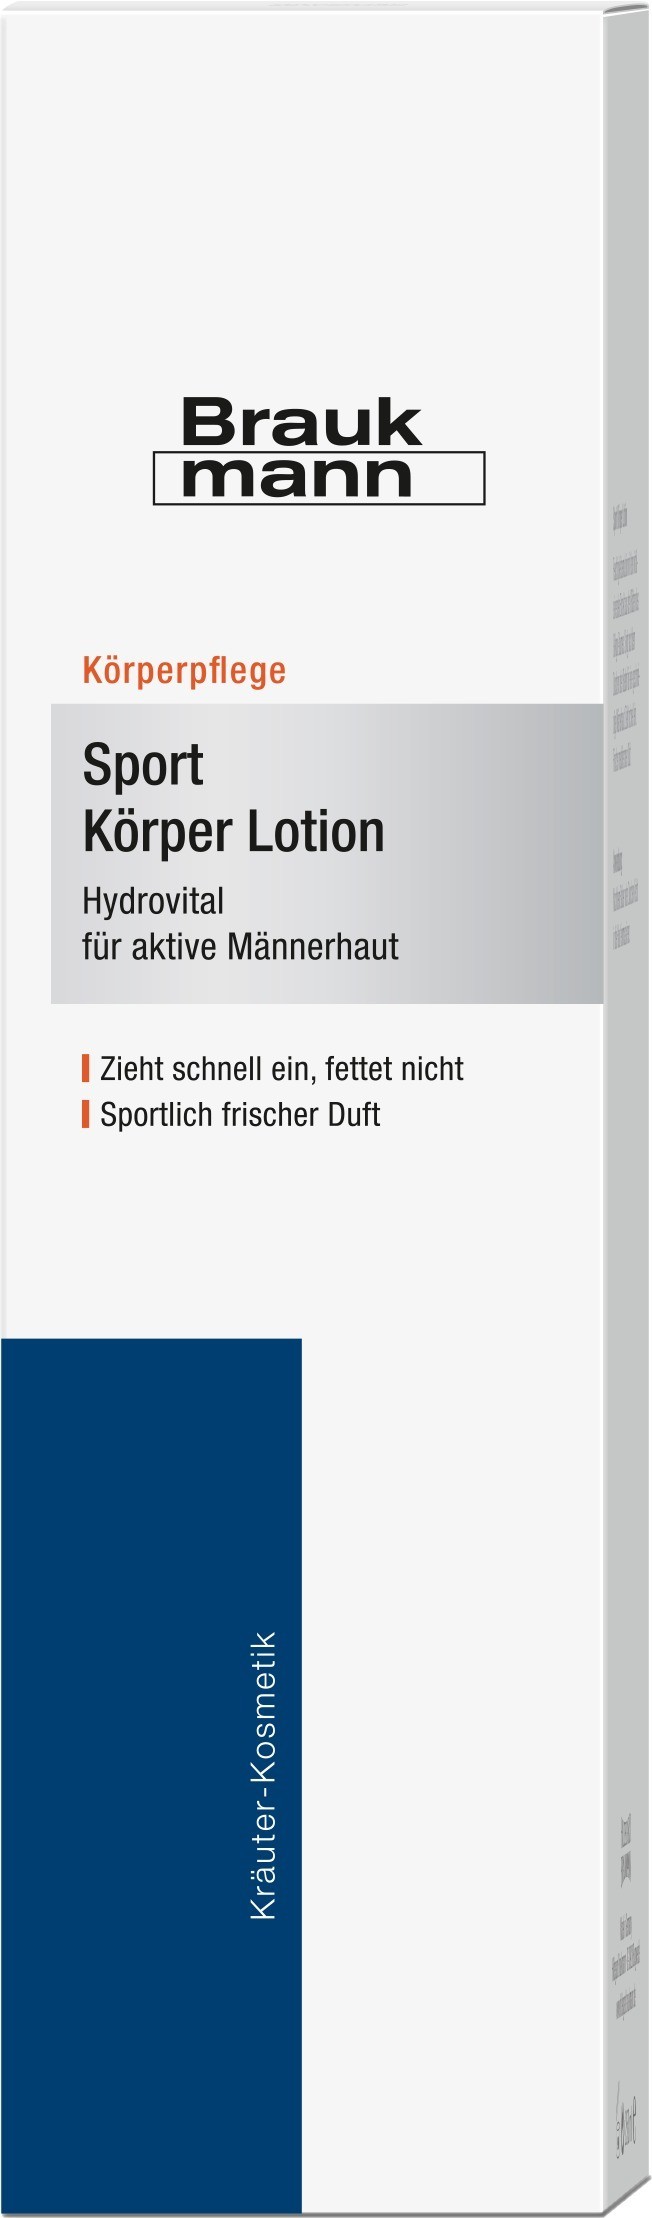 braukmann-sport-korper-lotion